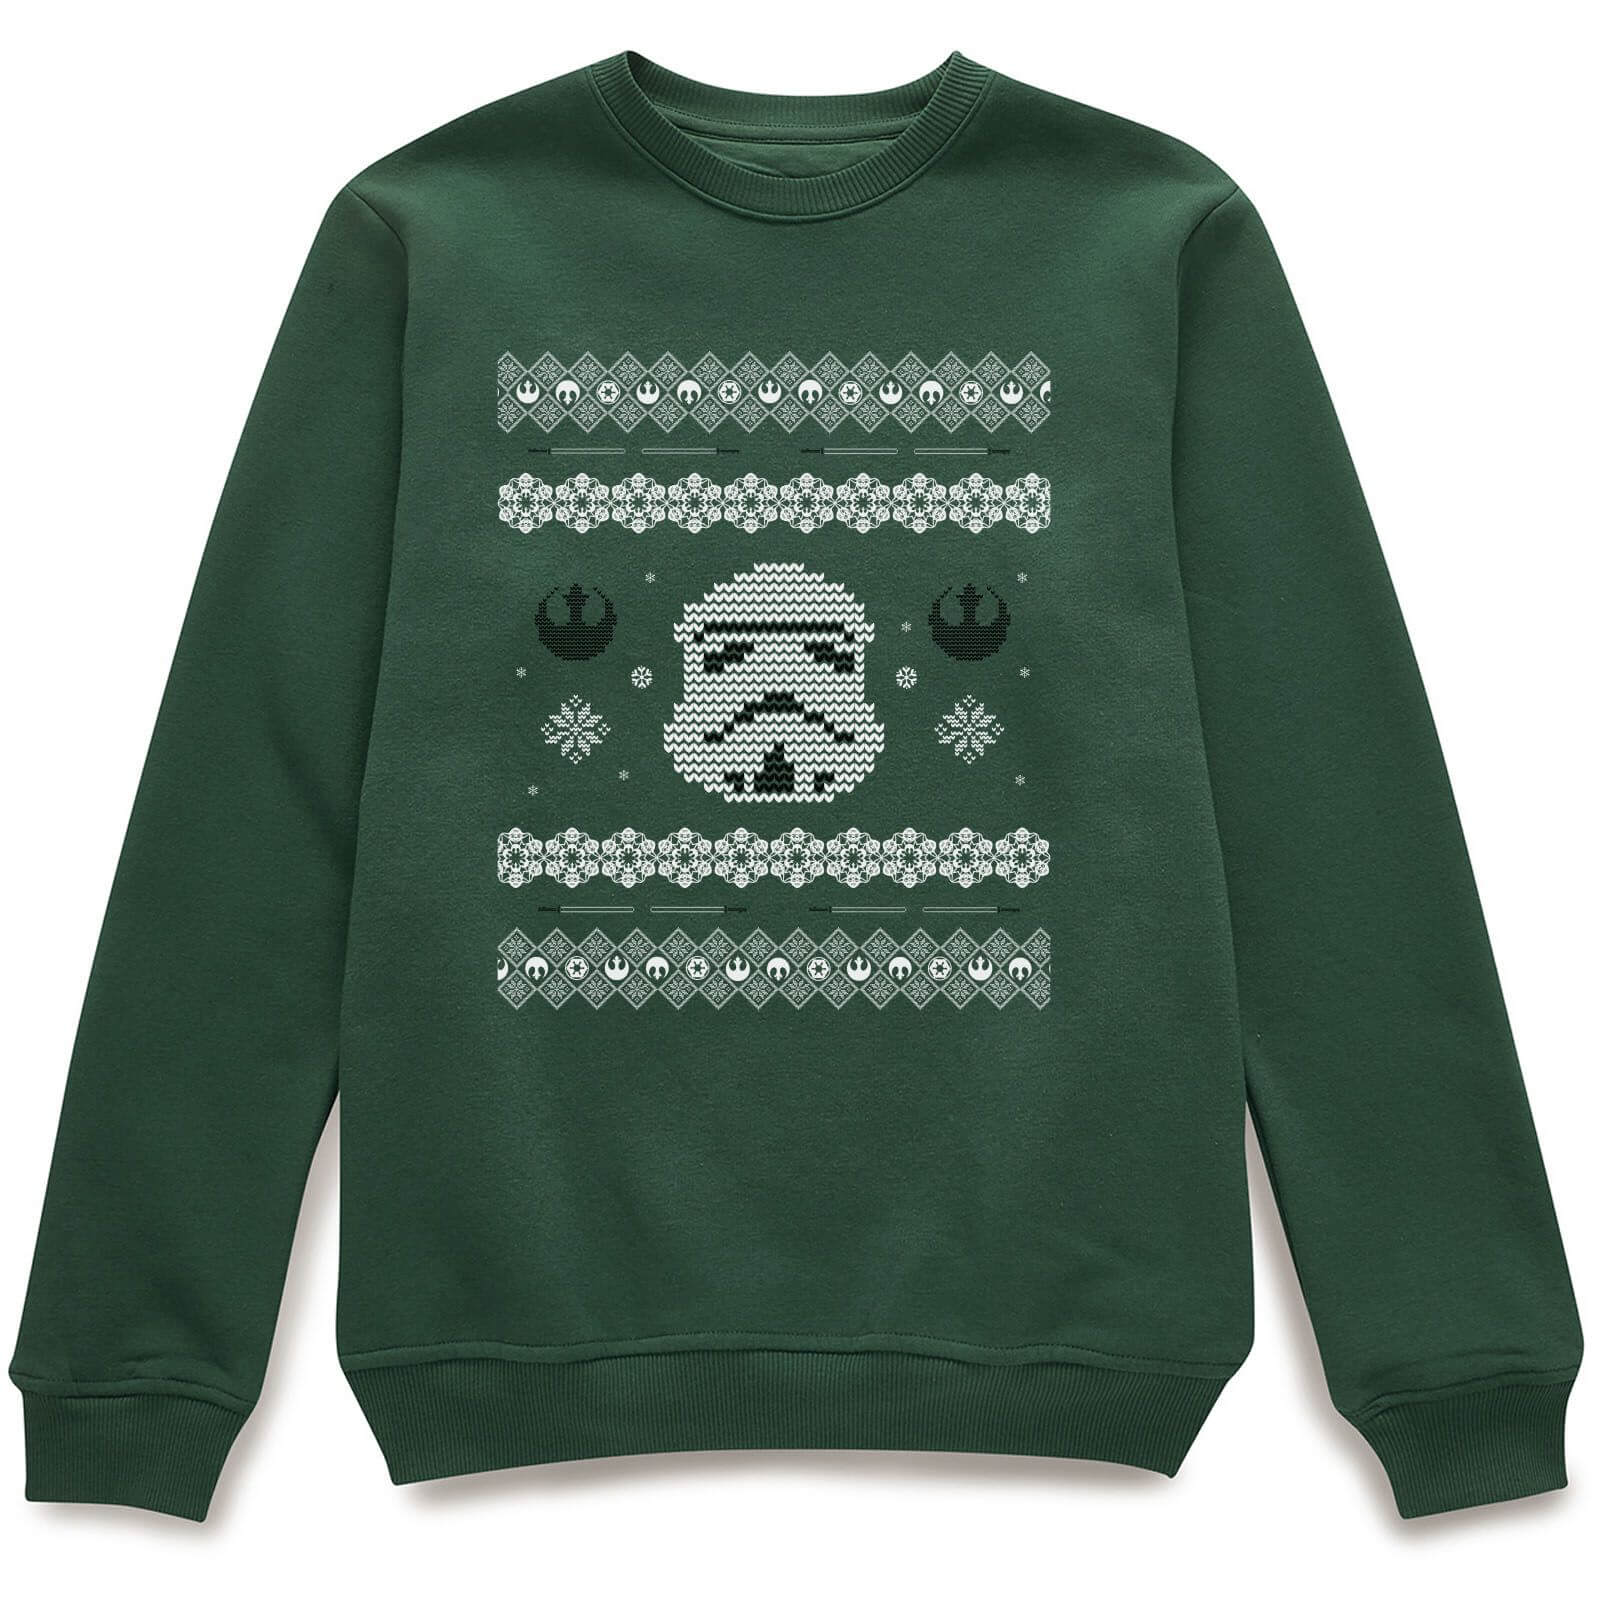 Star Wars Christmas Stormtrooper Knit Green Christmas Sweatshirt - XL - Green